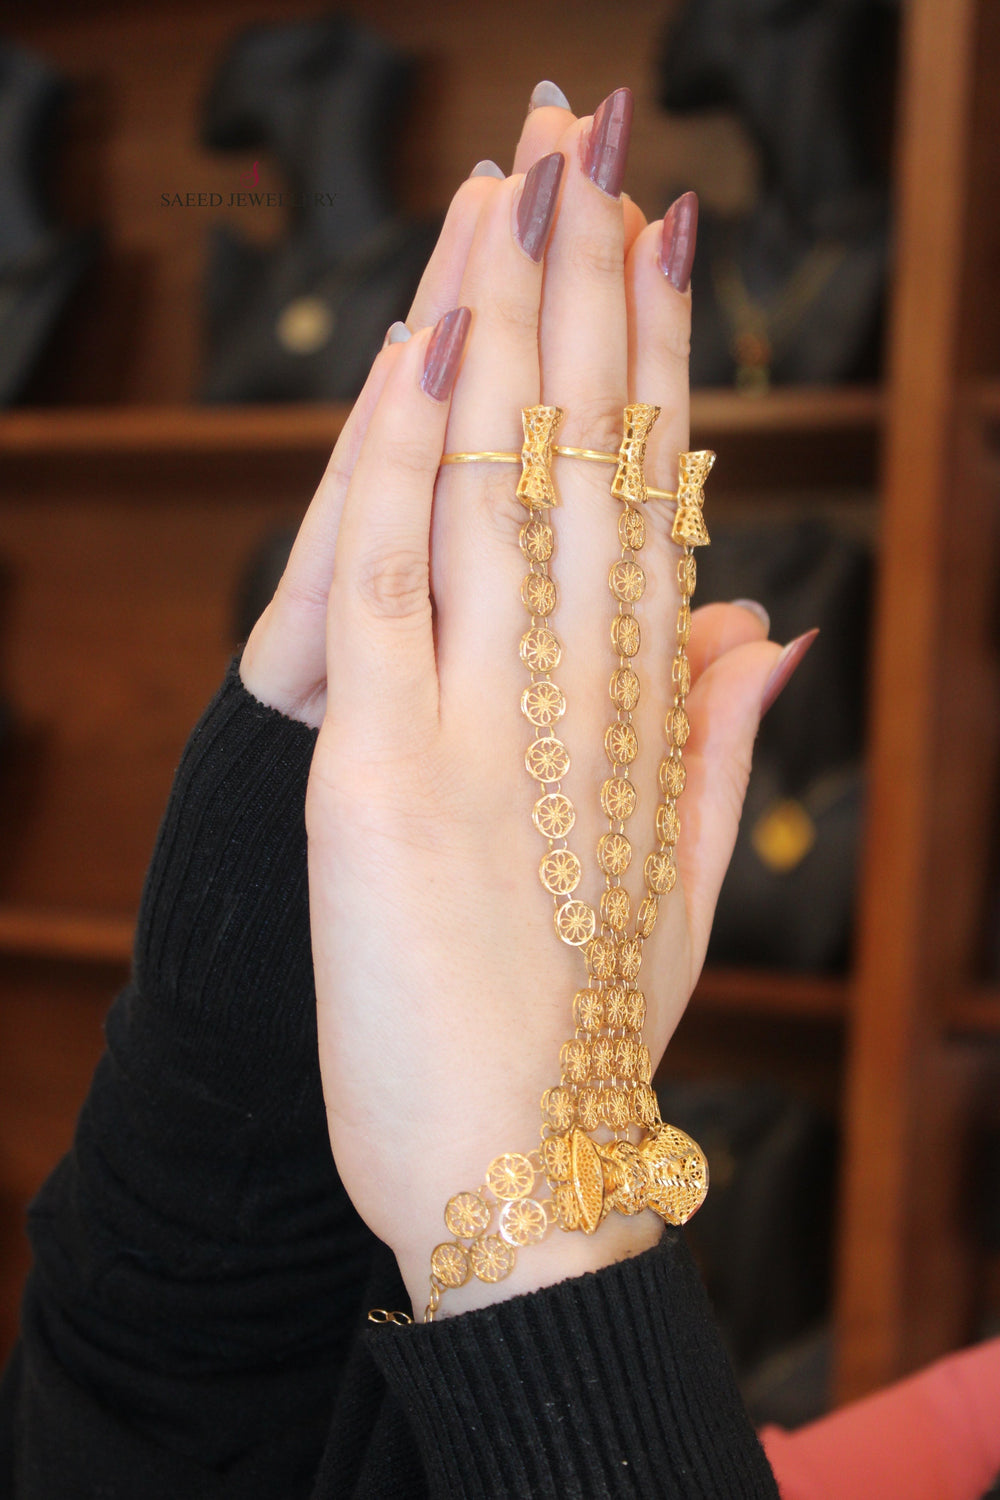 21K Gold Emirati Hand Bracelet by Saeed Jewelry - Image 2